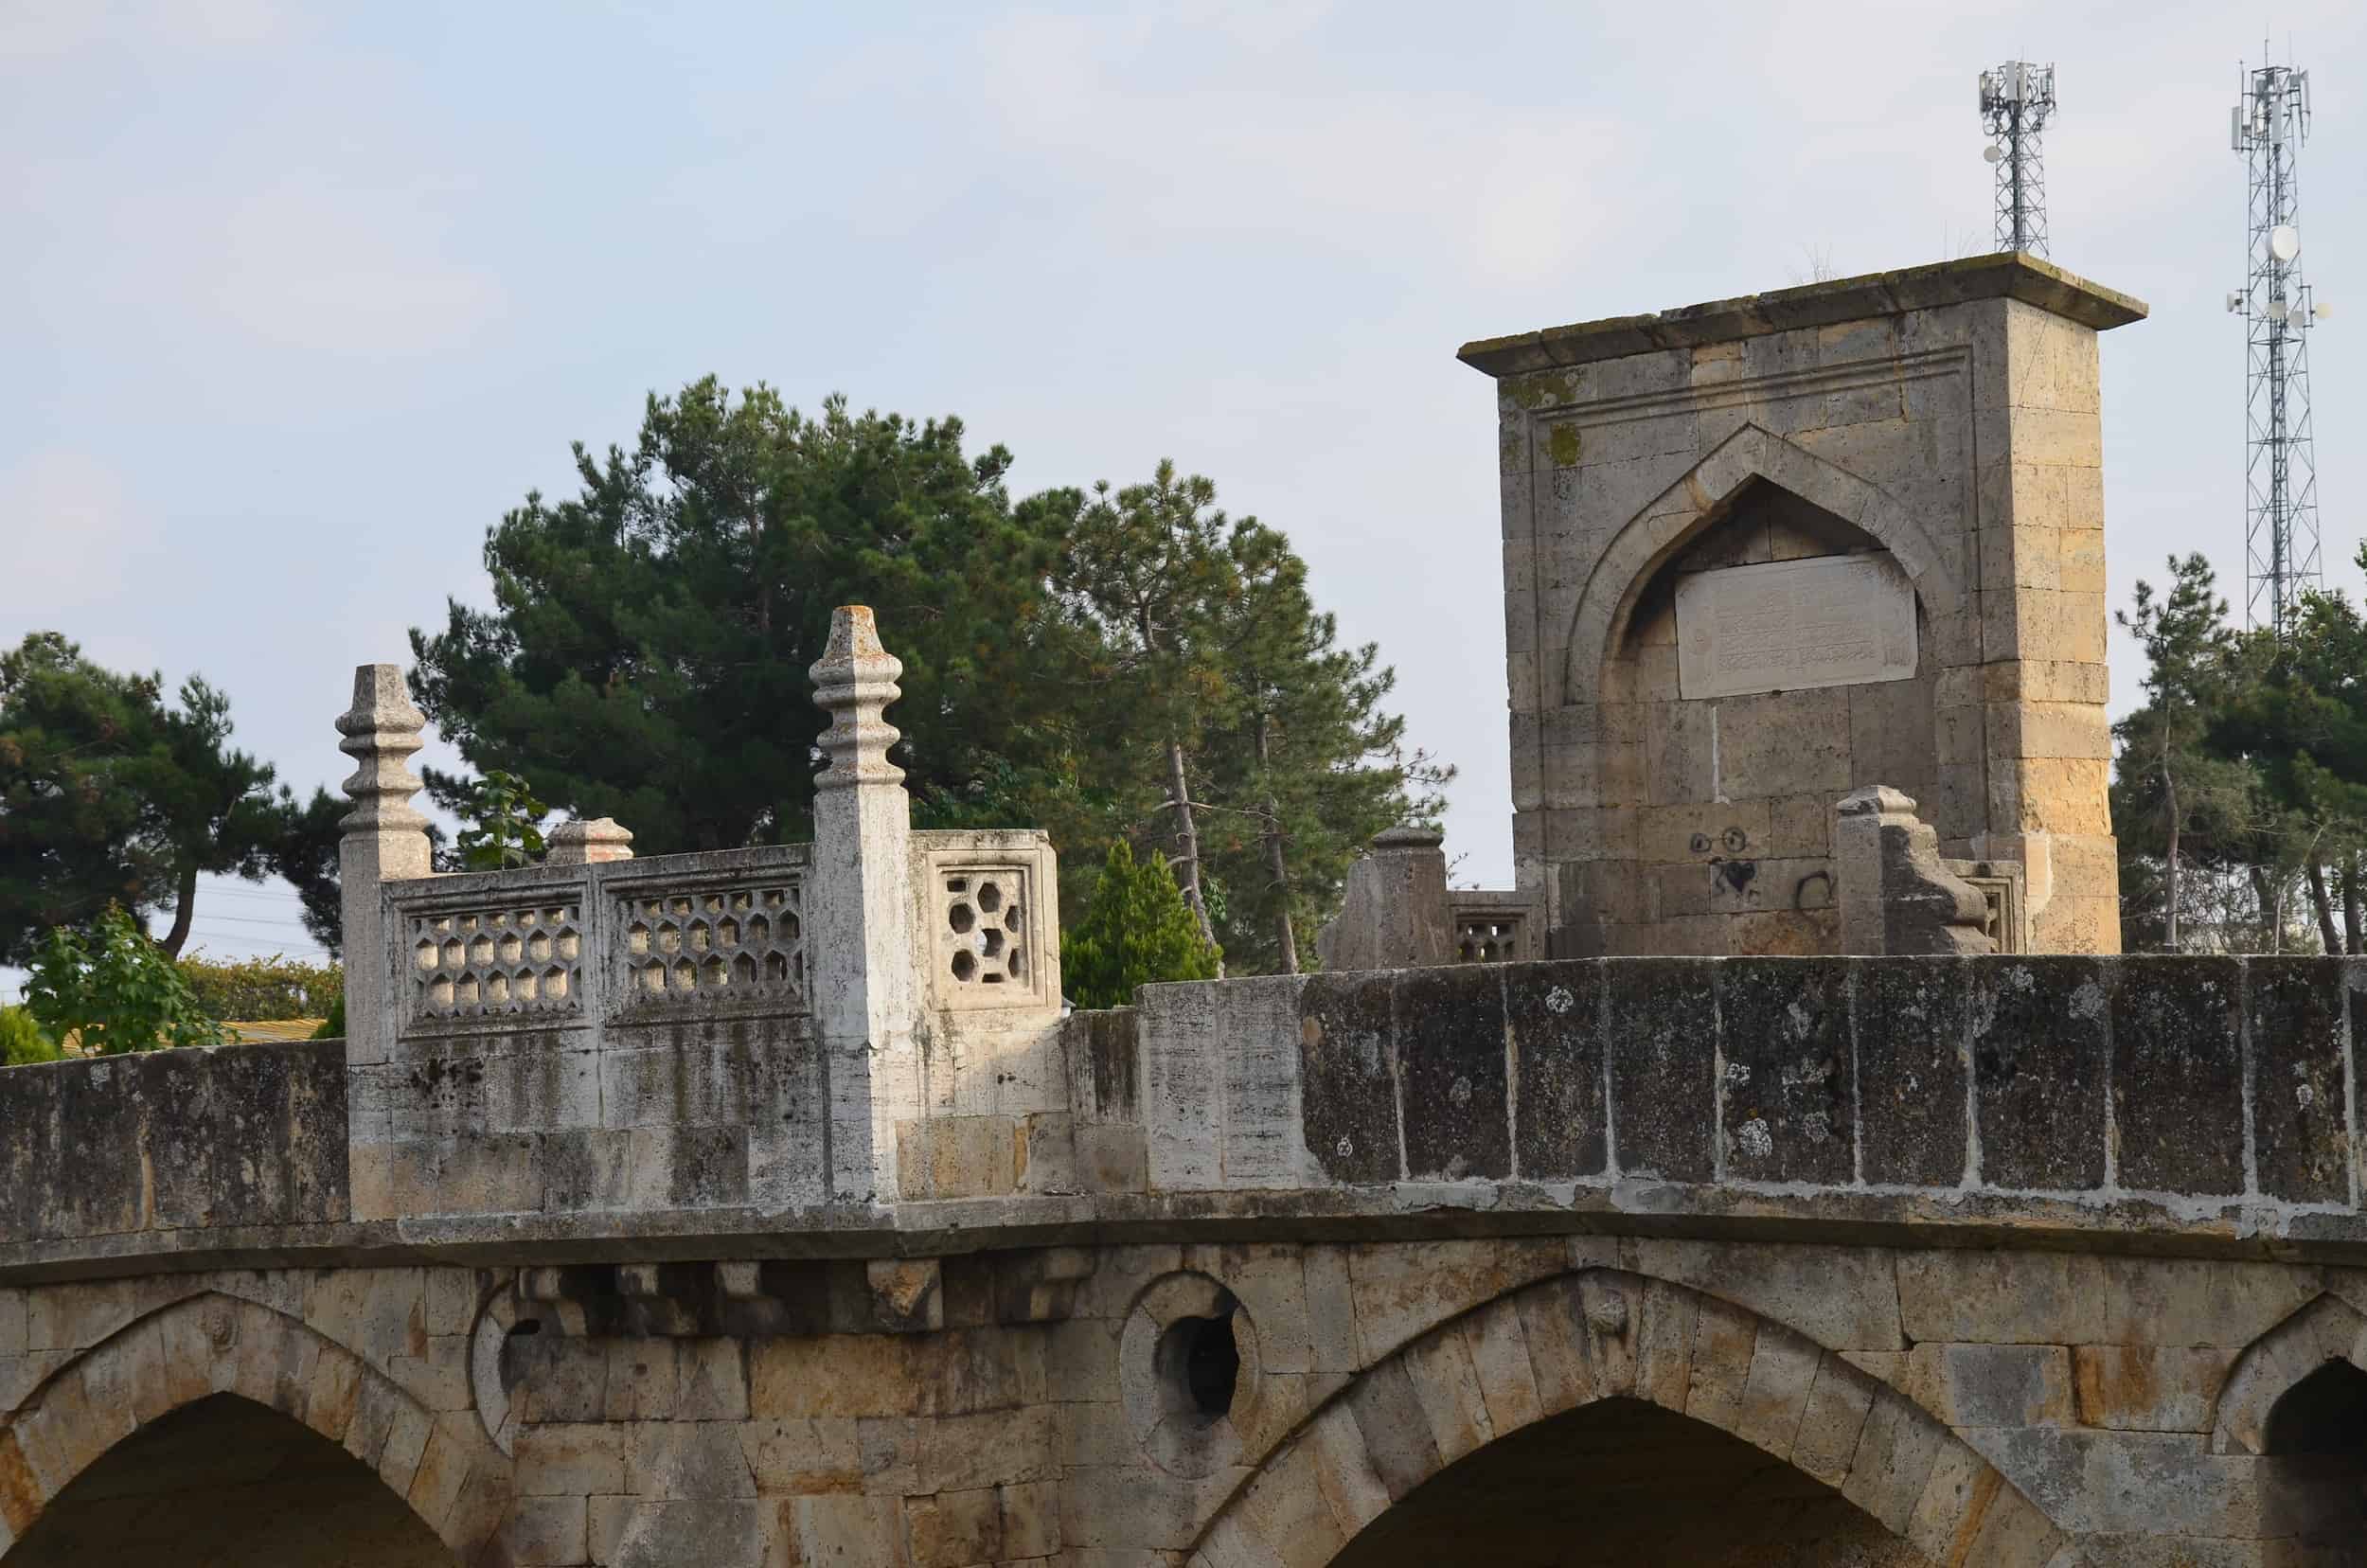 Tower and balcony on the bridge in Babaeski, Turkey